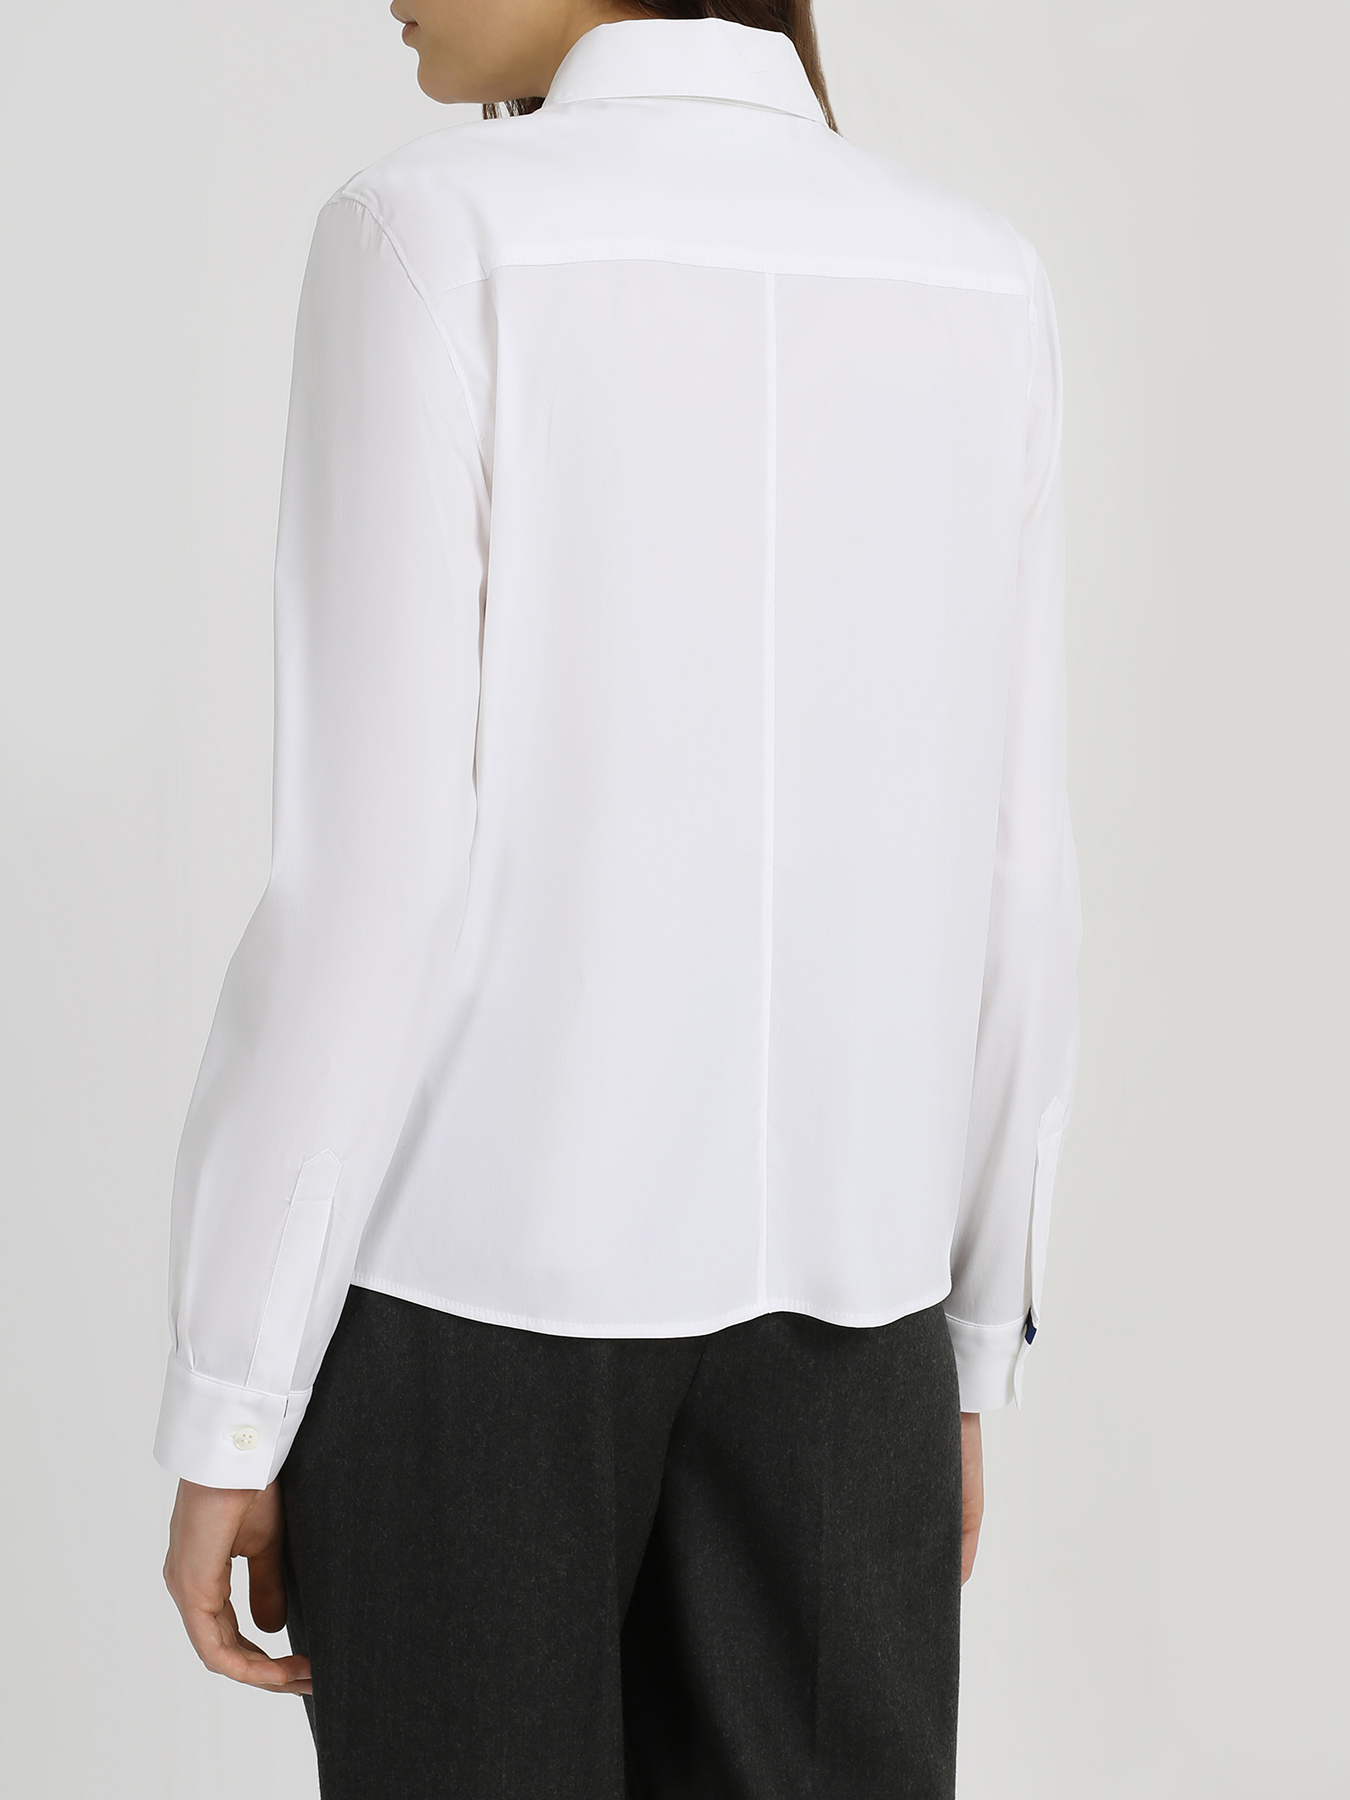 Finisterre Рубашка с длинным рукавом 334173-024 Фото 2